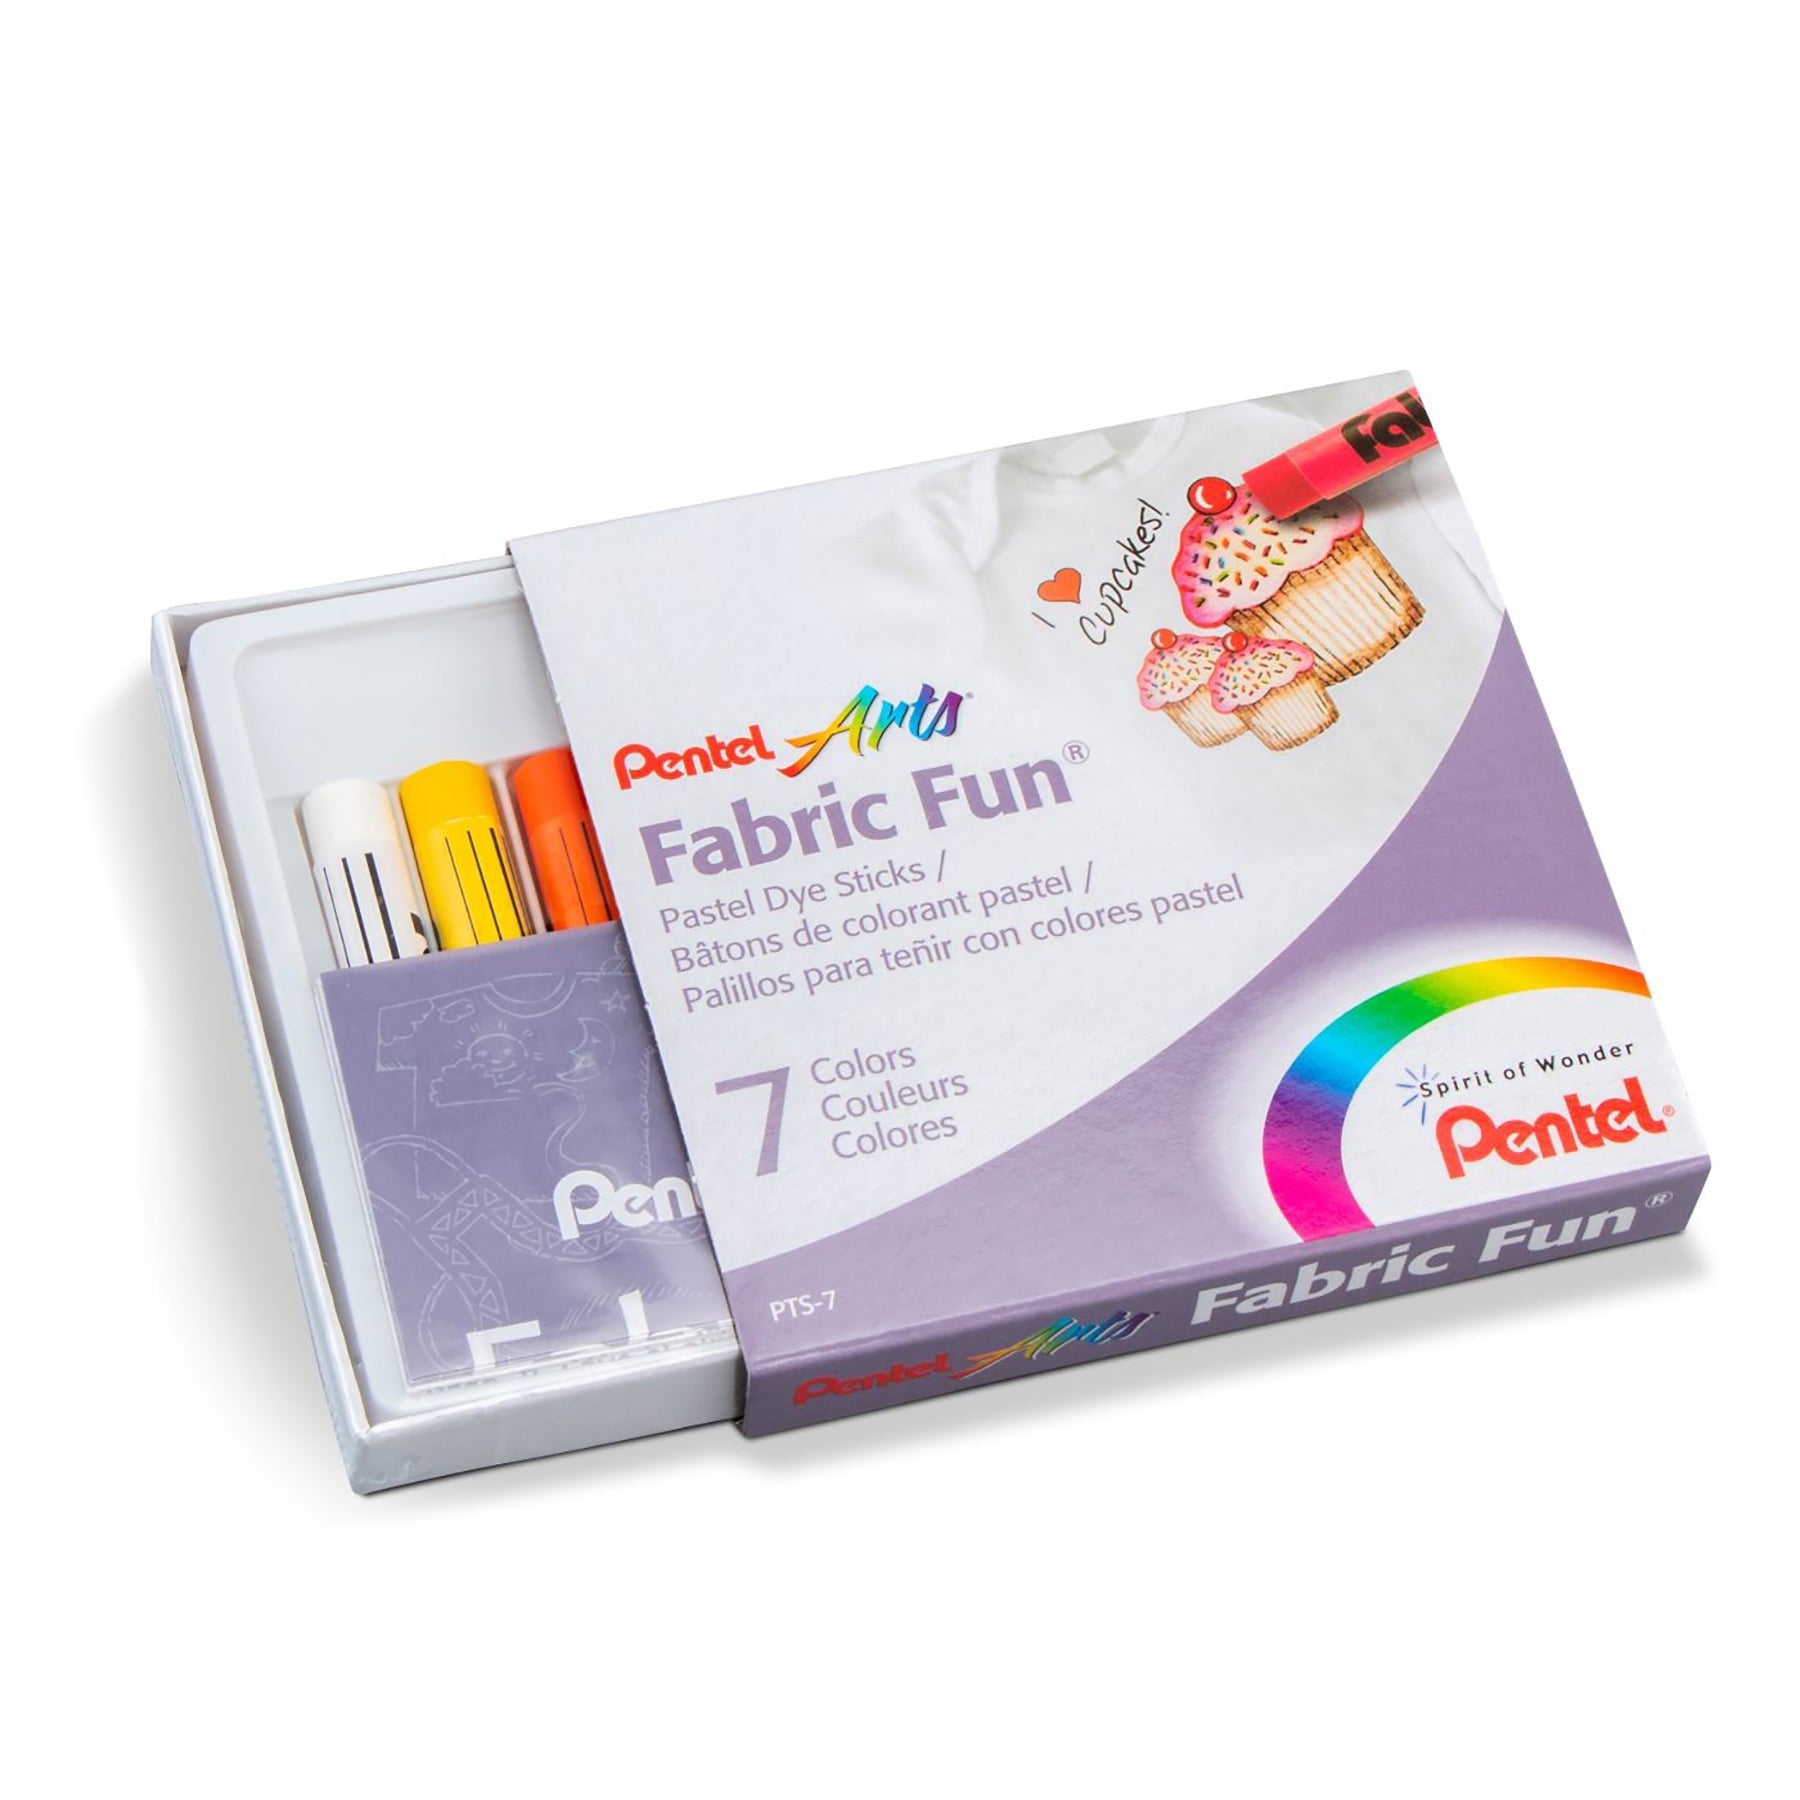 Pentel Arts 7 Fabric Fun Pastel Dye Sticks 2.4in